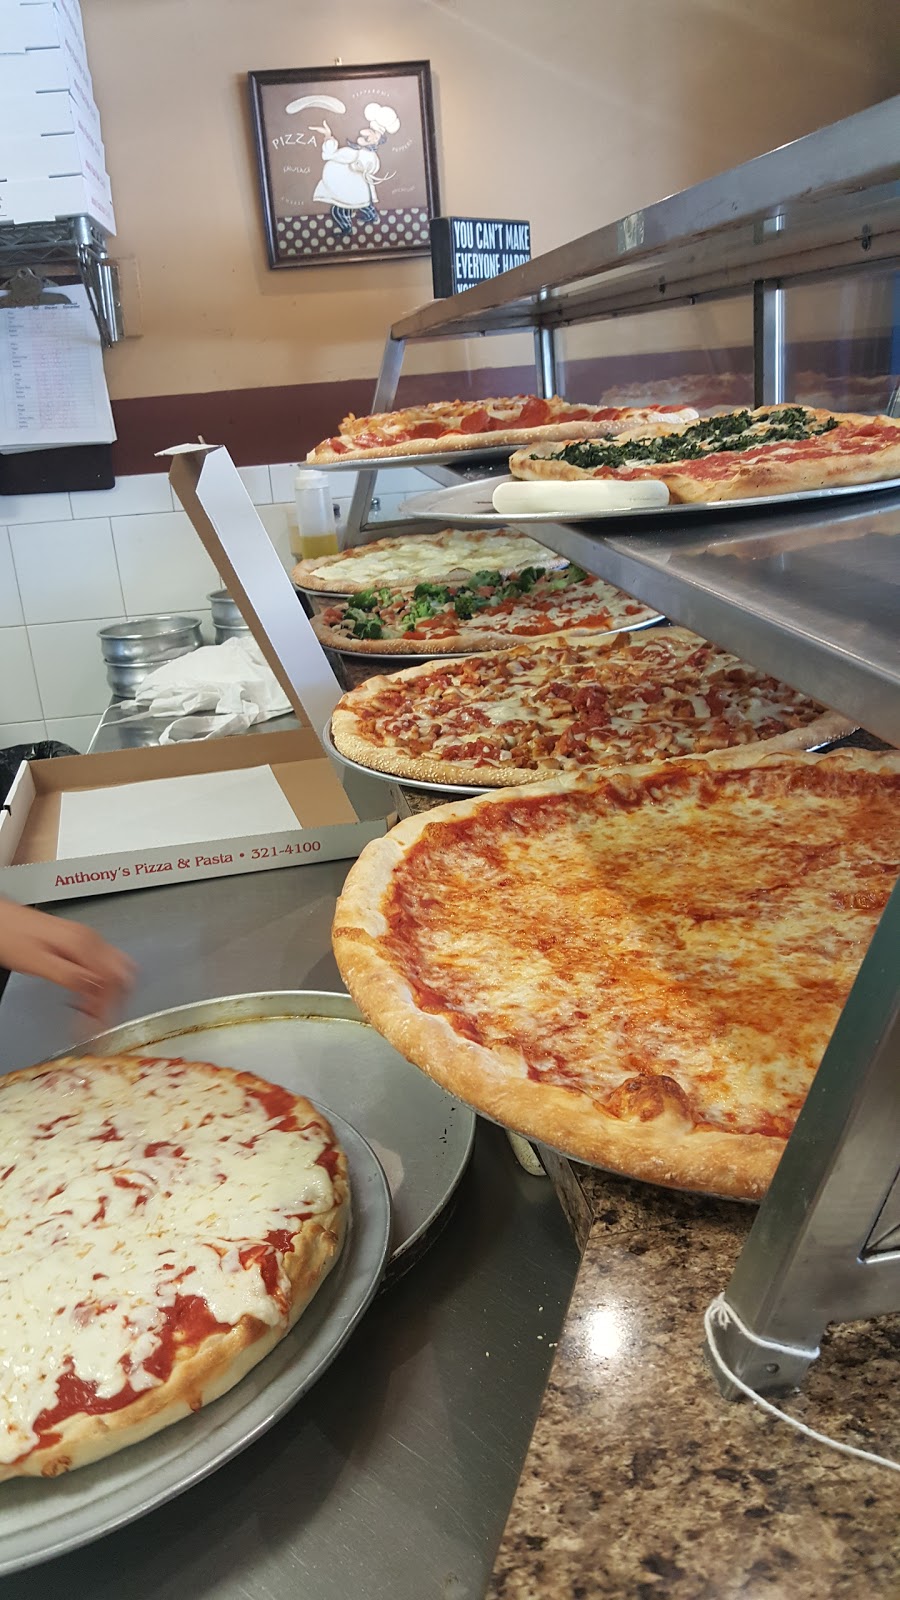 Anthonys Pizza & Pasta | 791 Udall Rd, West Islip, NY 11795 | Phone: (631) 321-4100